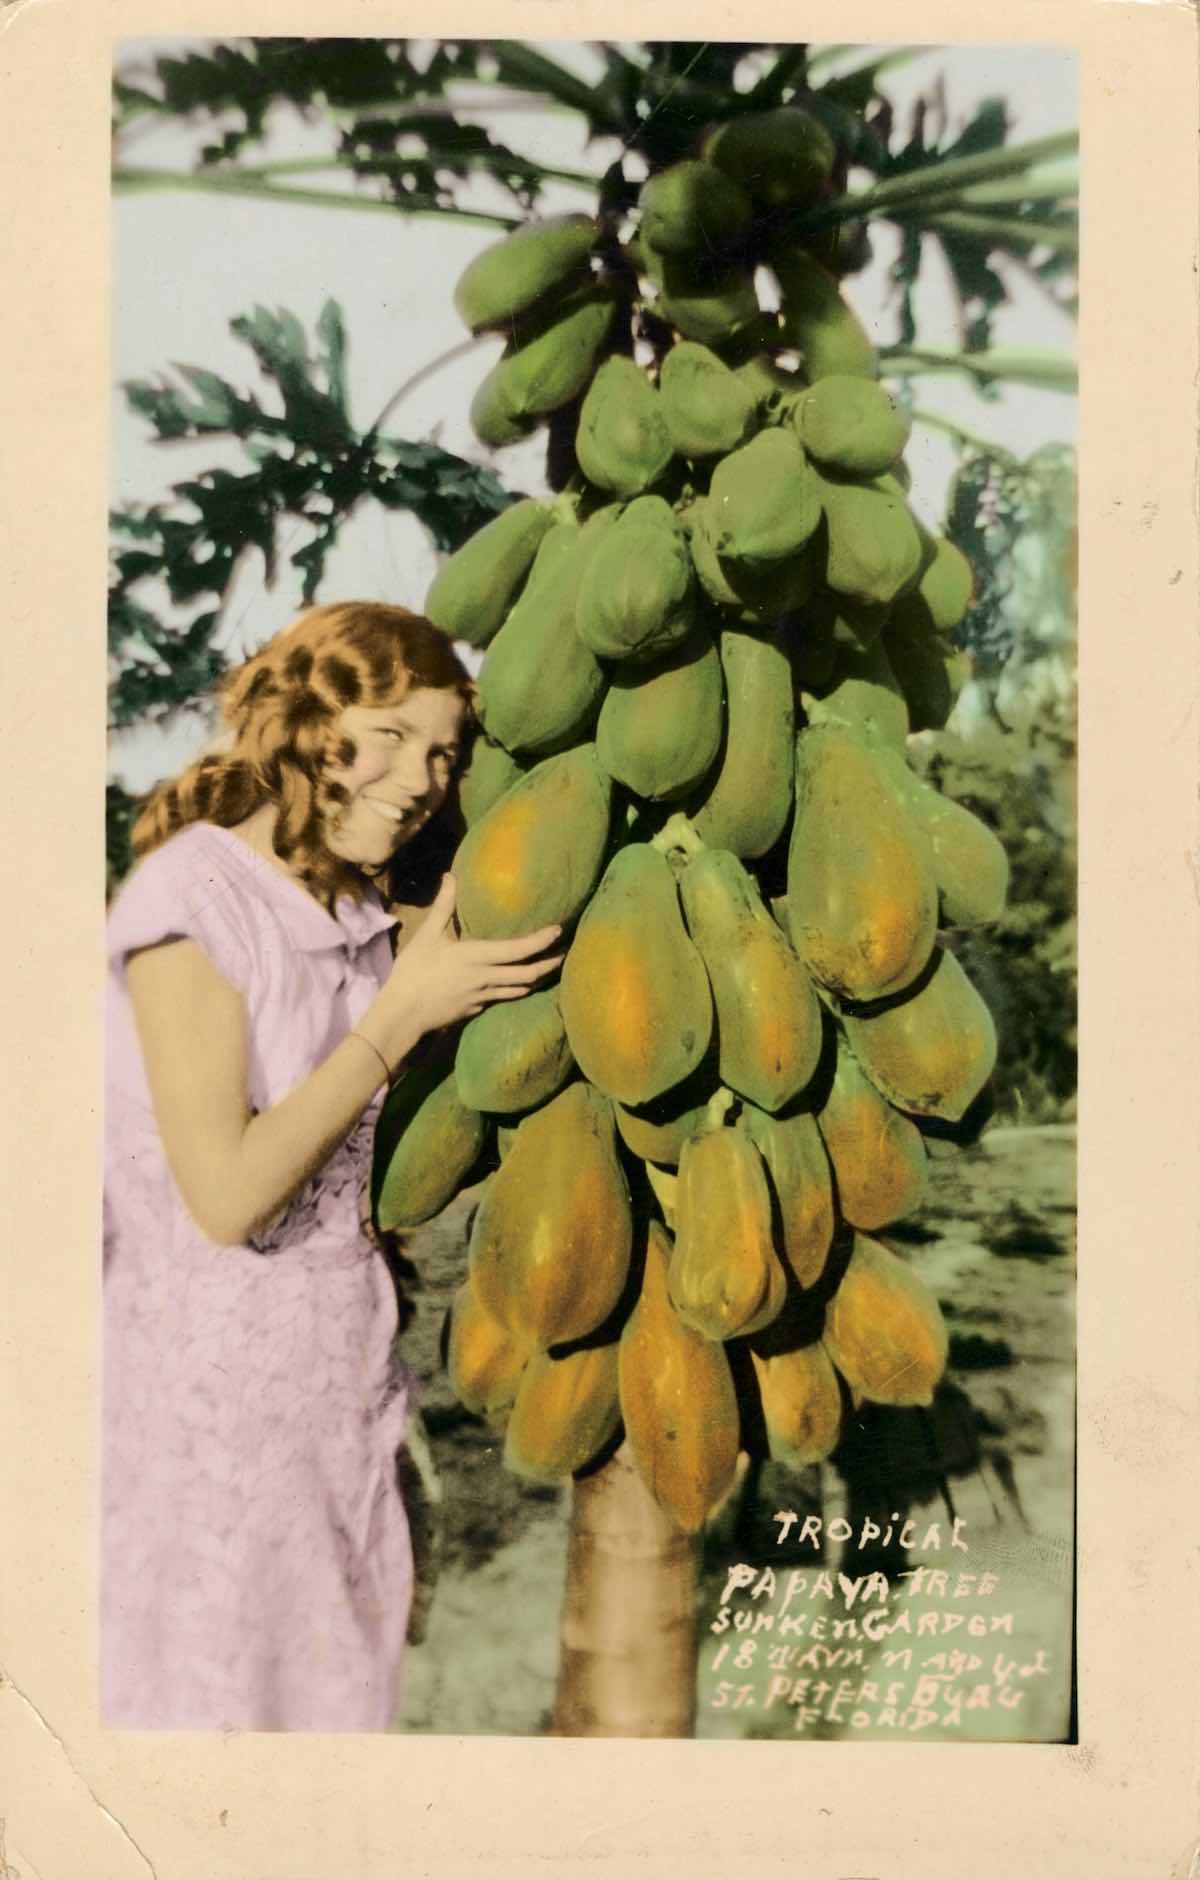 woman showing off papaya tree